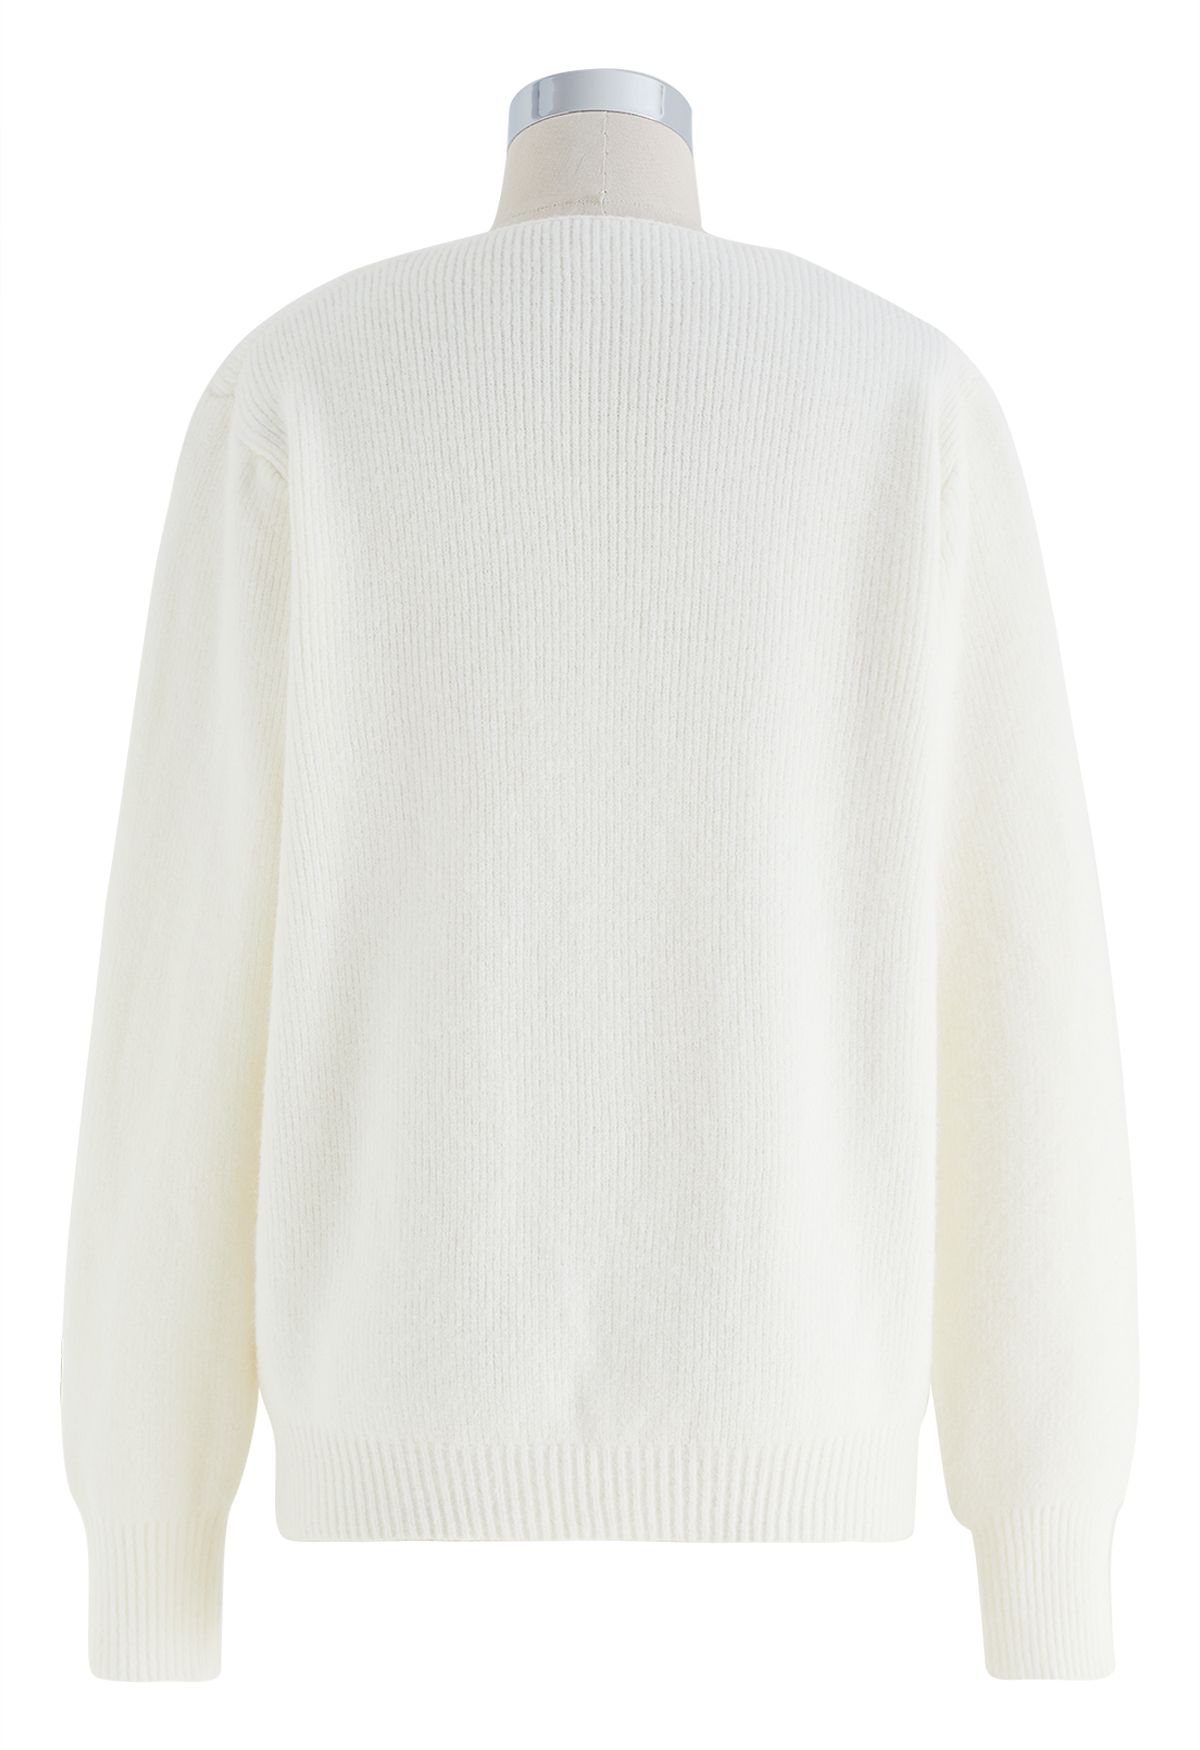 Cutout Pearl Neckline Knit Sweater in White